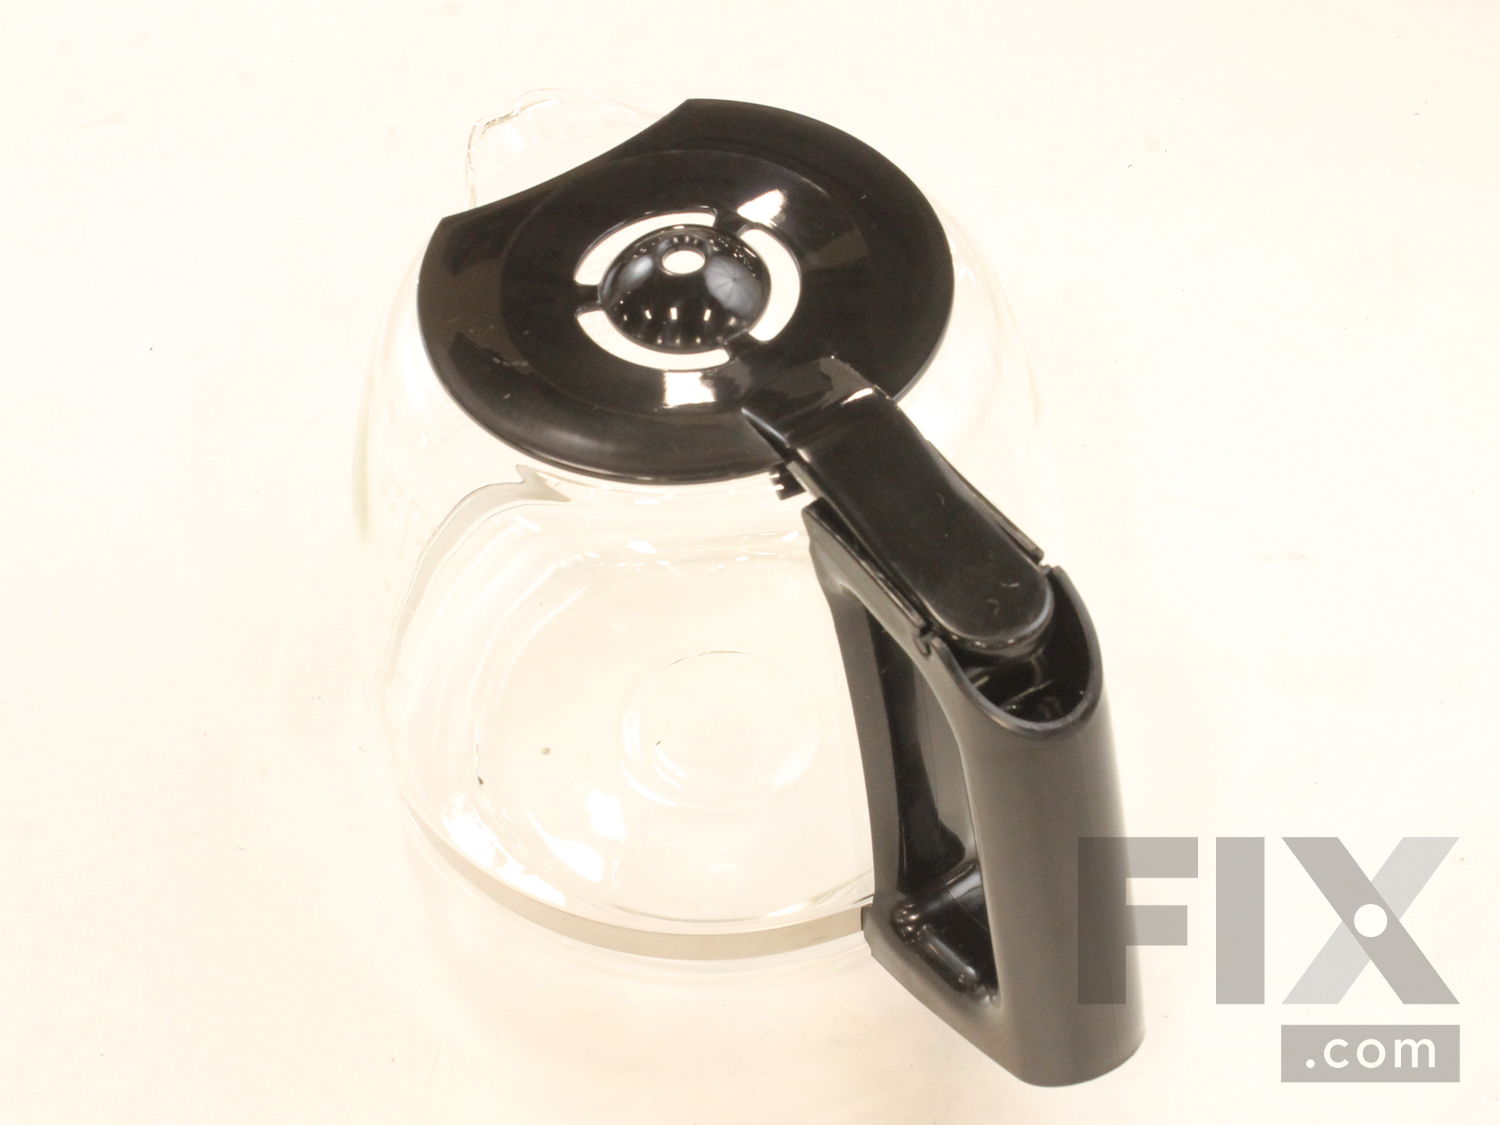 OEM Black and Decker BCM1410B-01 Duralife Glass Carafe 